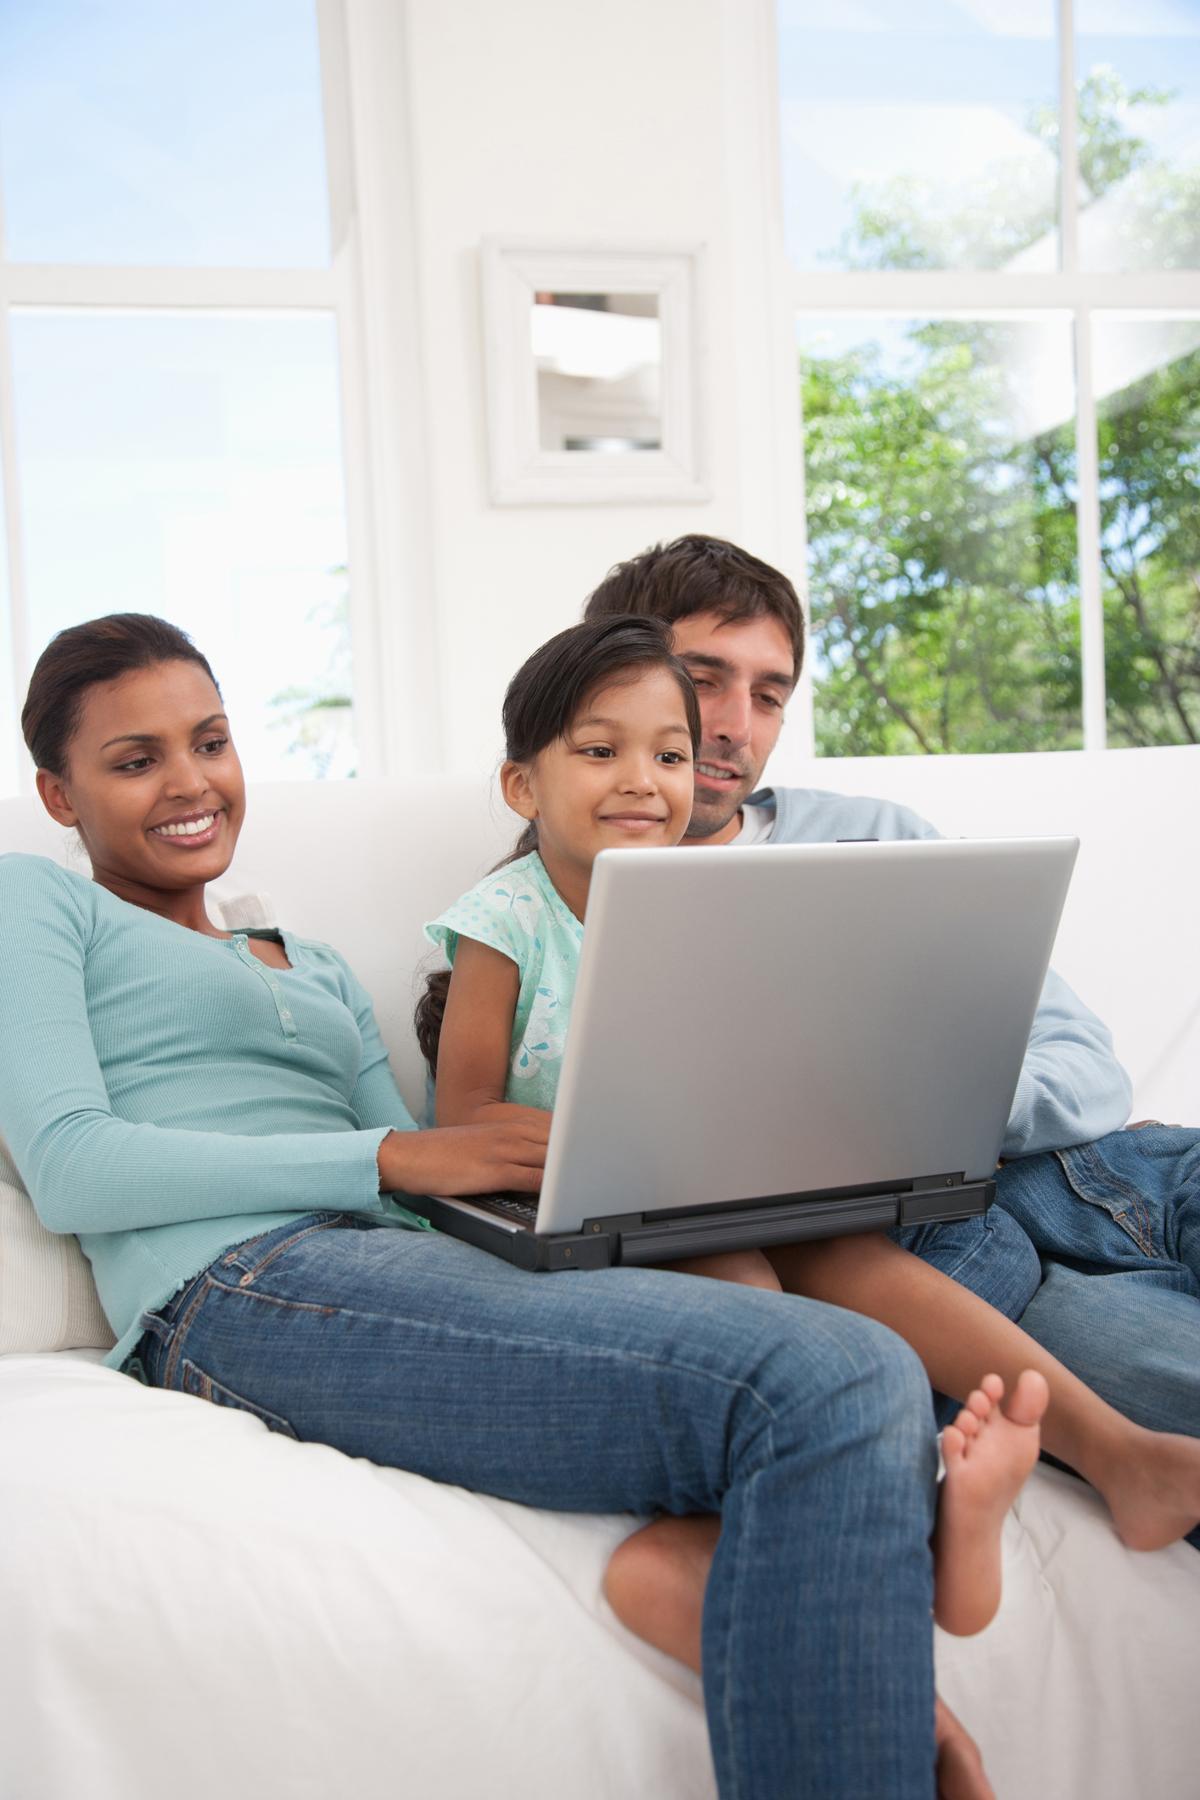 Free Webcam Chat Rooms for Kids - Is it Safe? - Apt Parenting